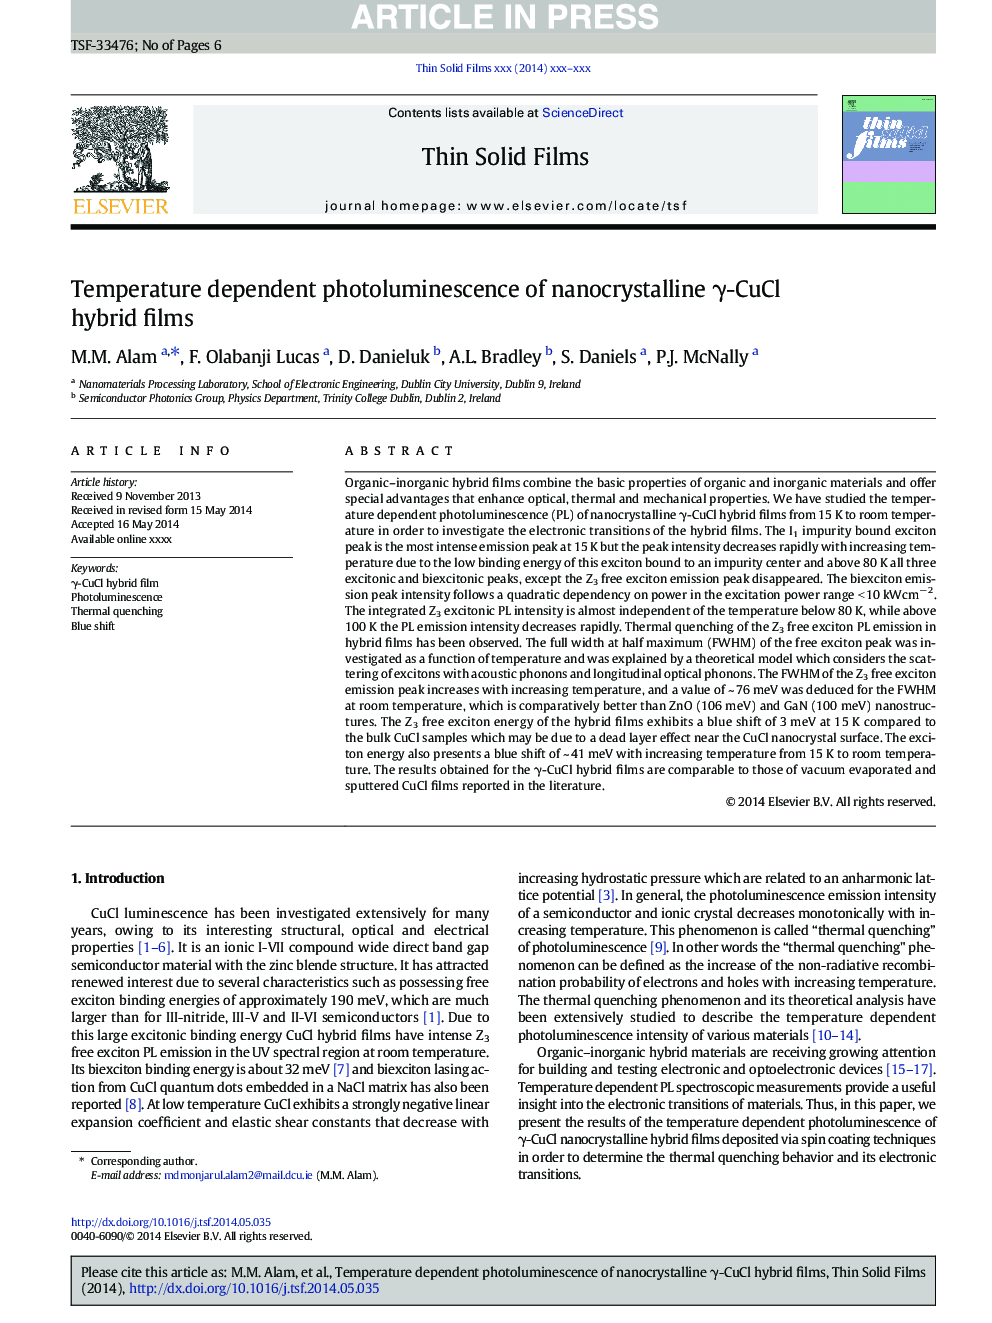 Temperature dependent photoluminescence of nanocrystalline Î³-CuCl hybrid films